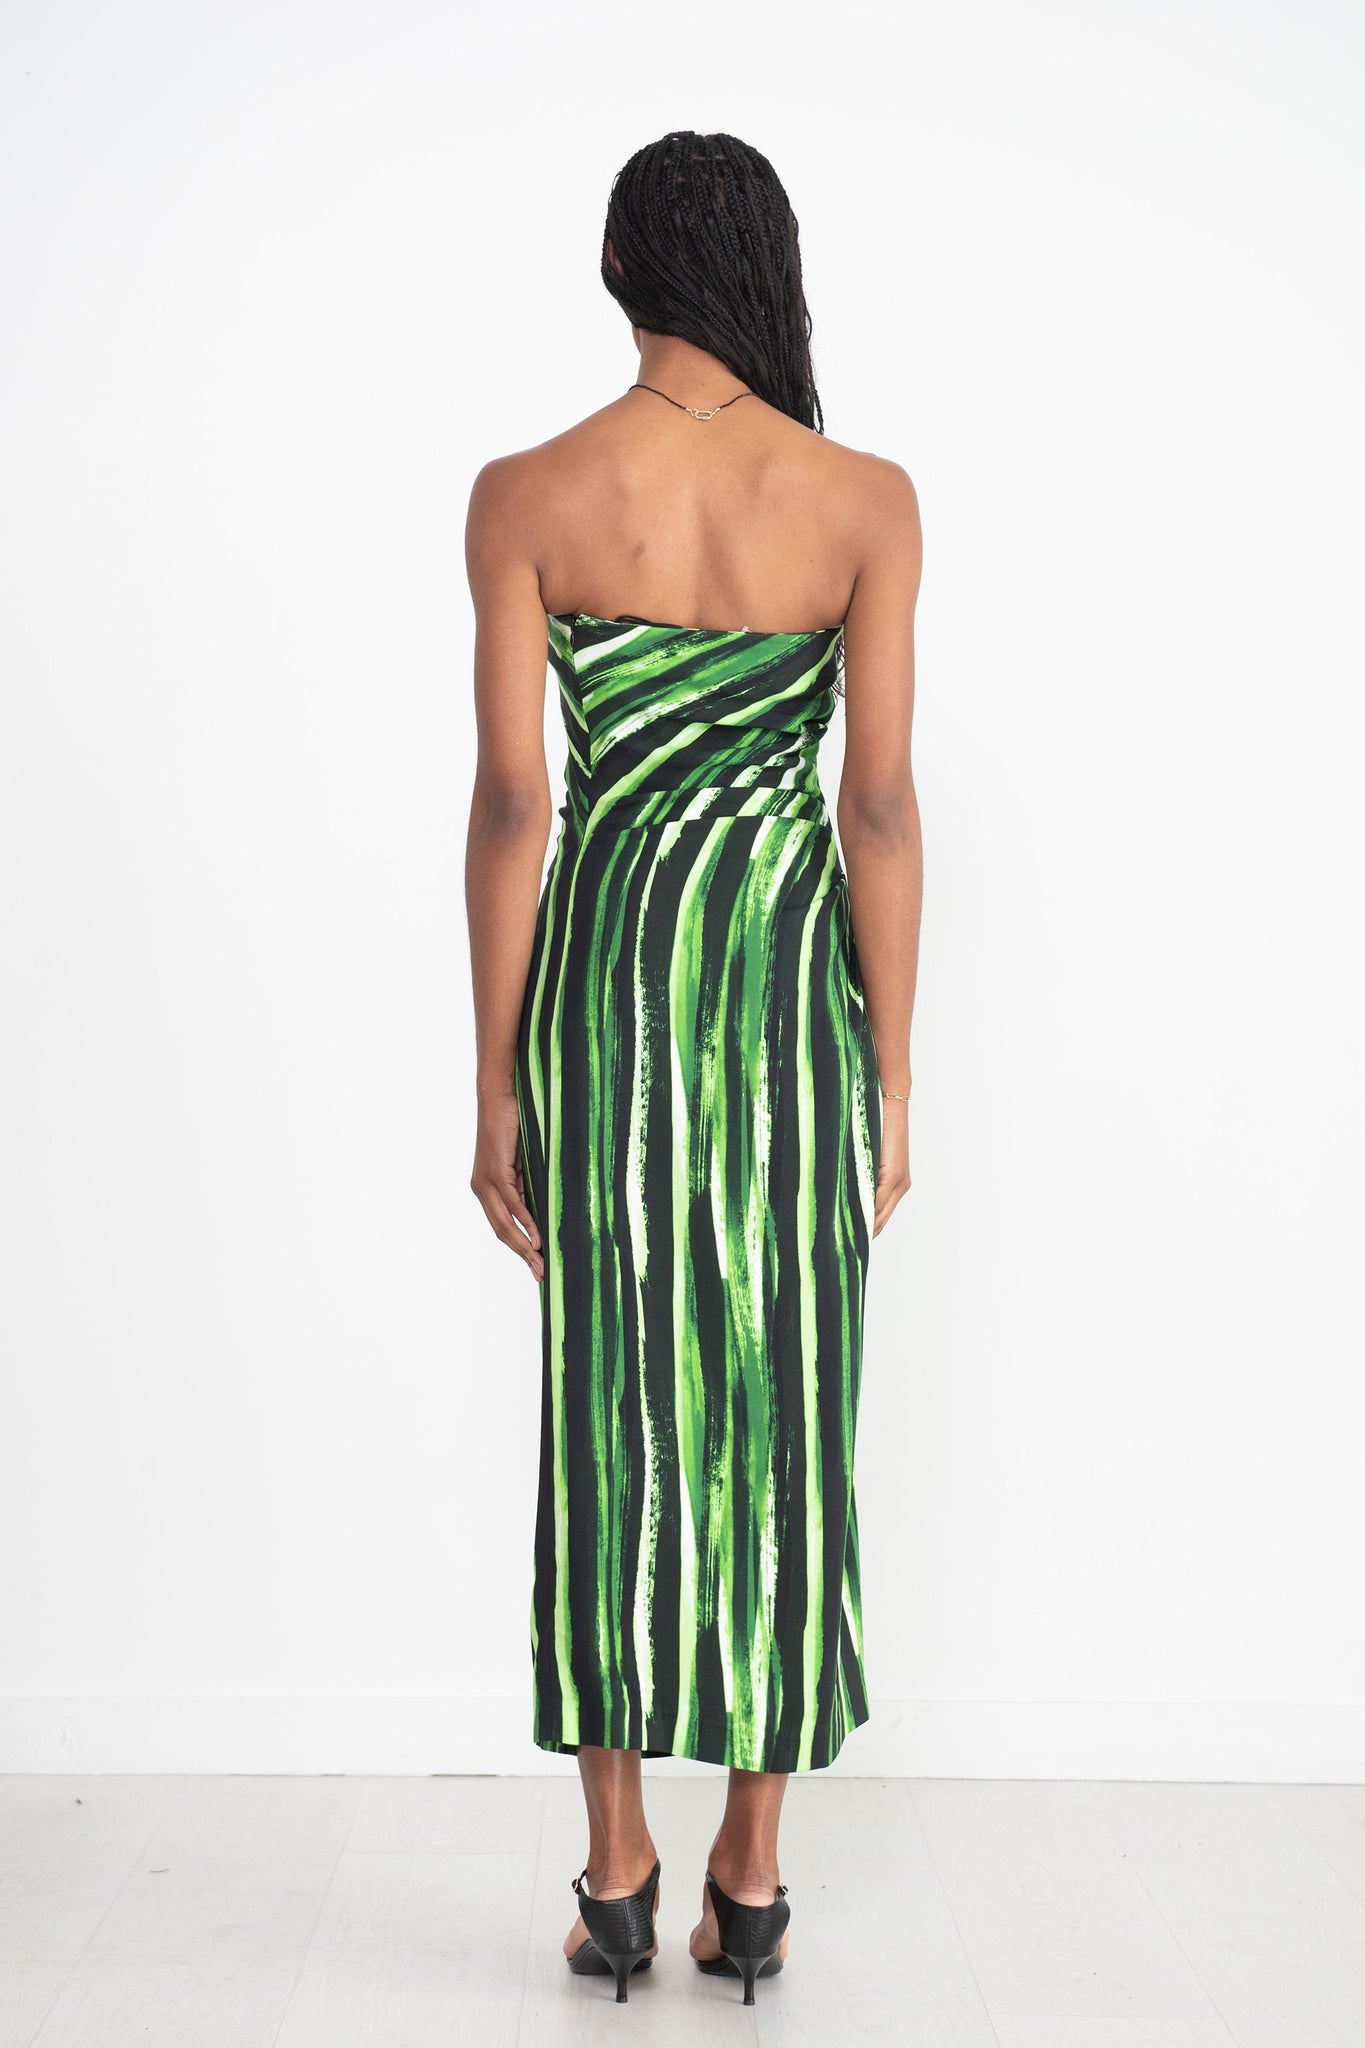 proenza schouler - Painted Stripe Strapless Dress, Fatigue Multi